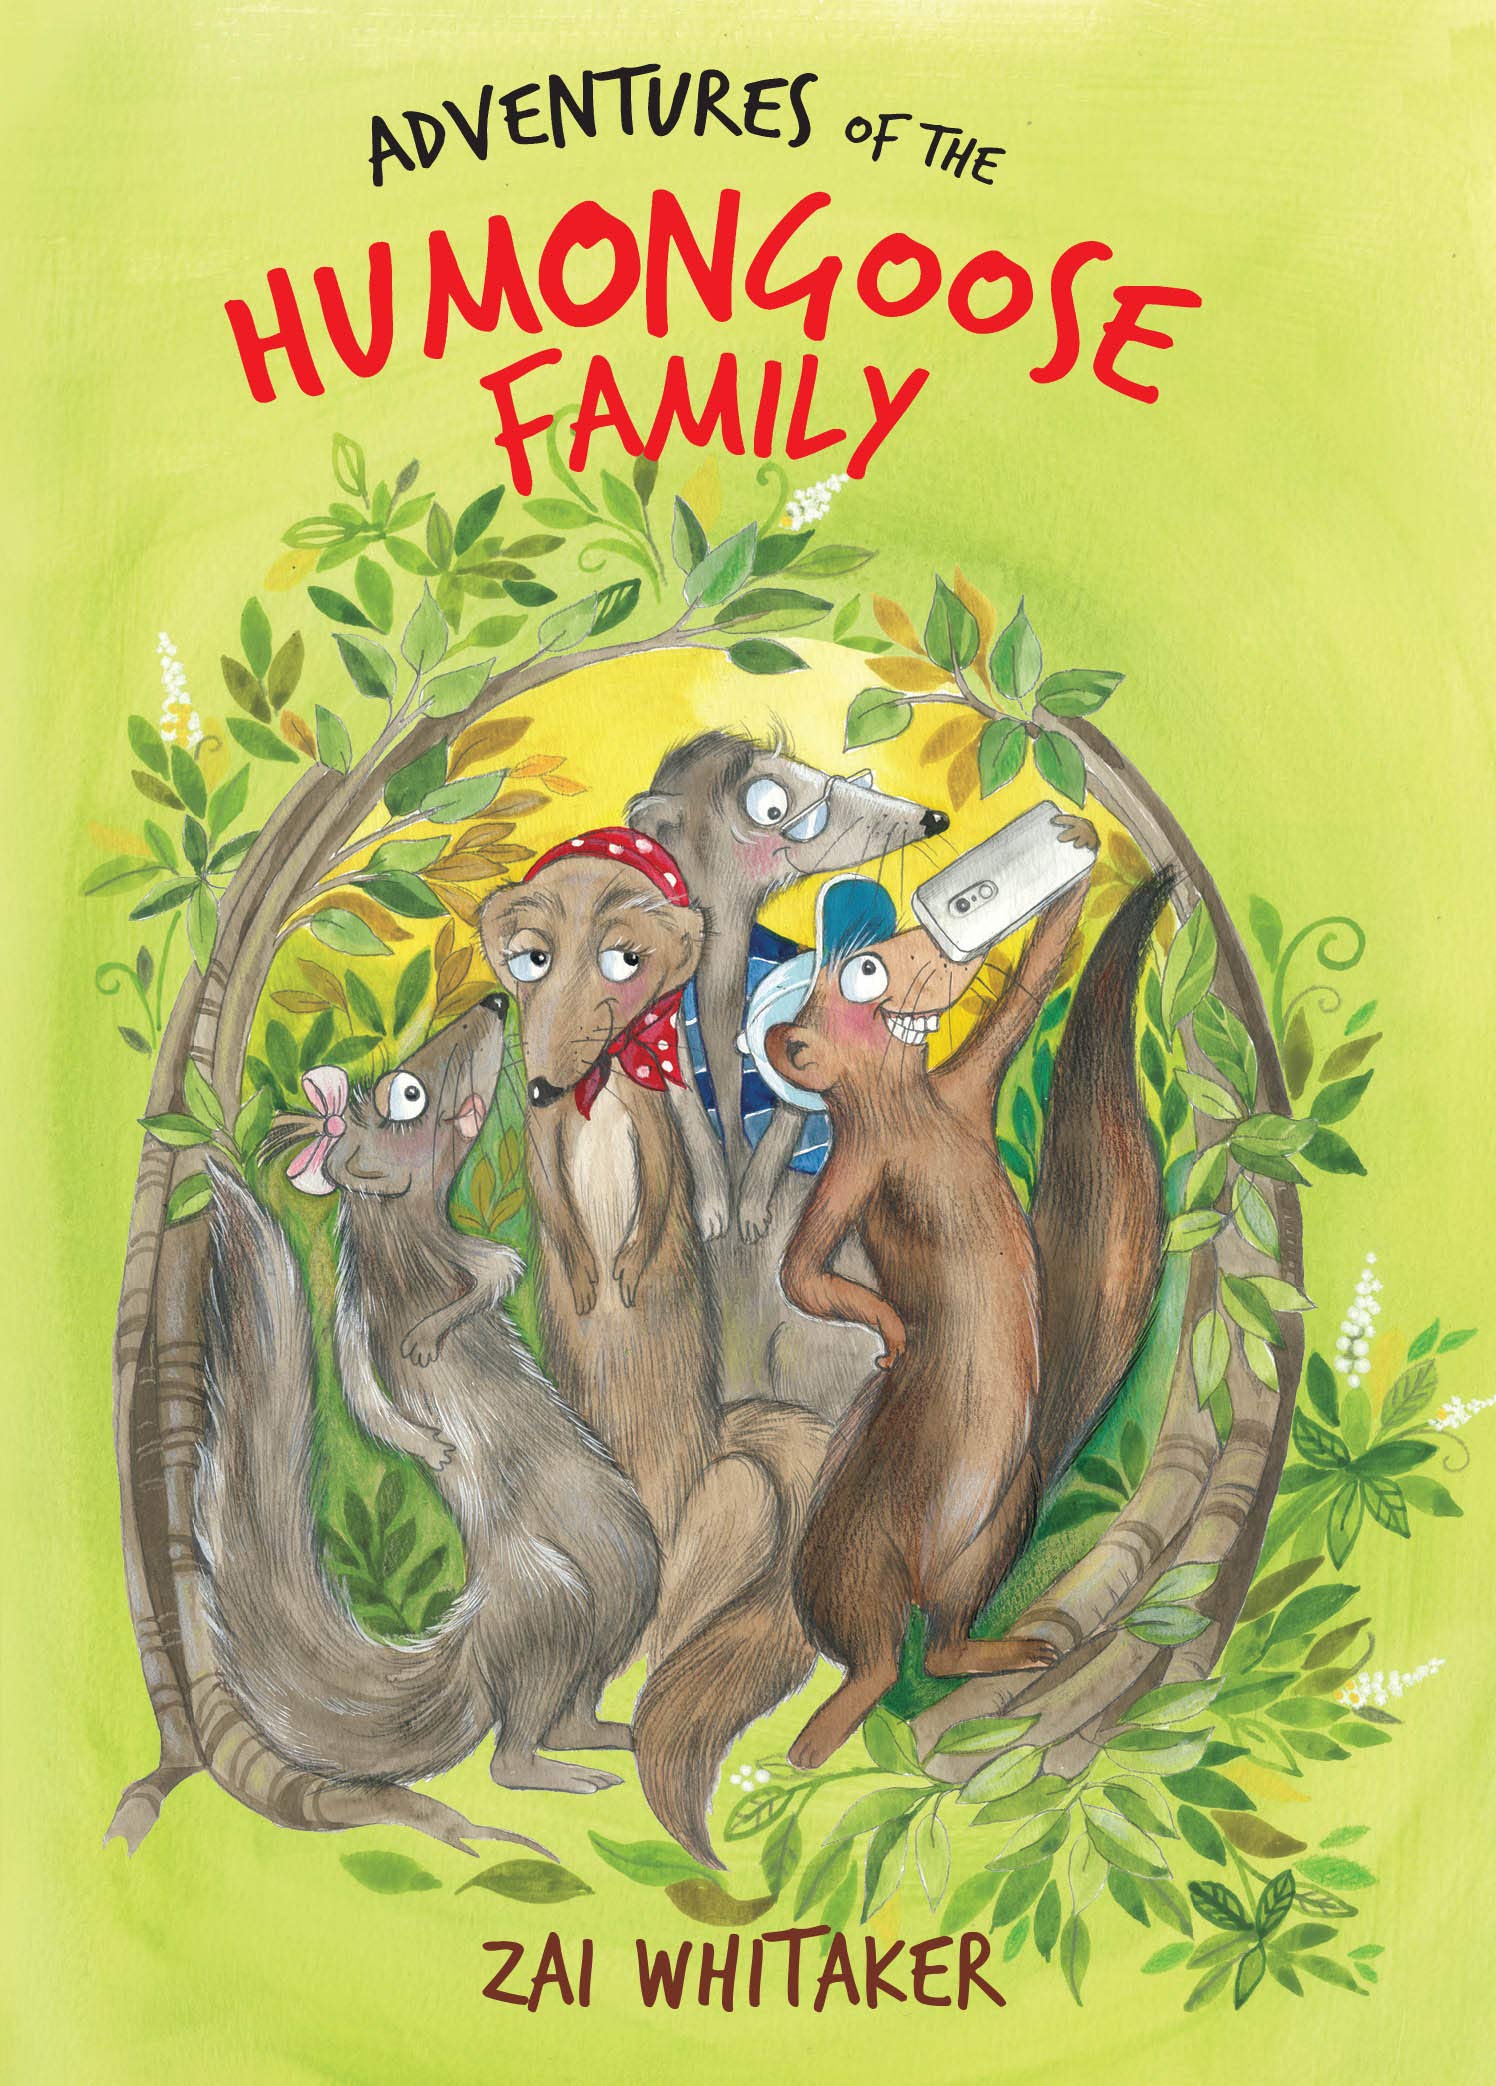 Humangoose family